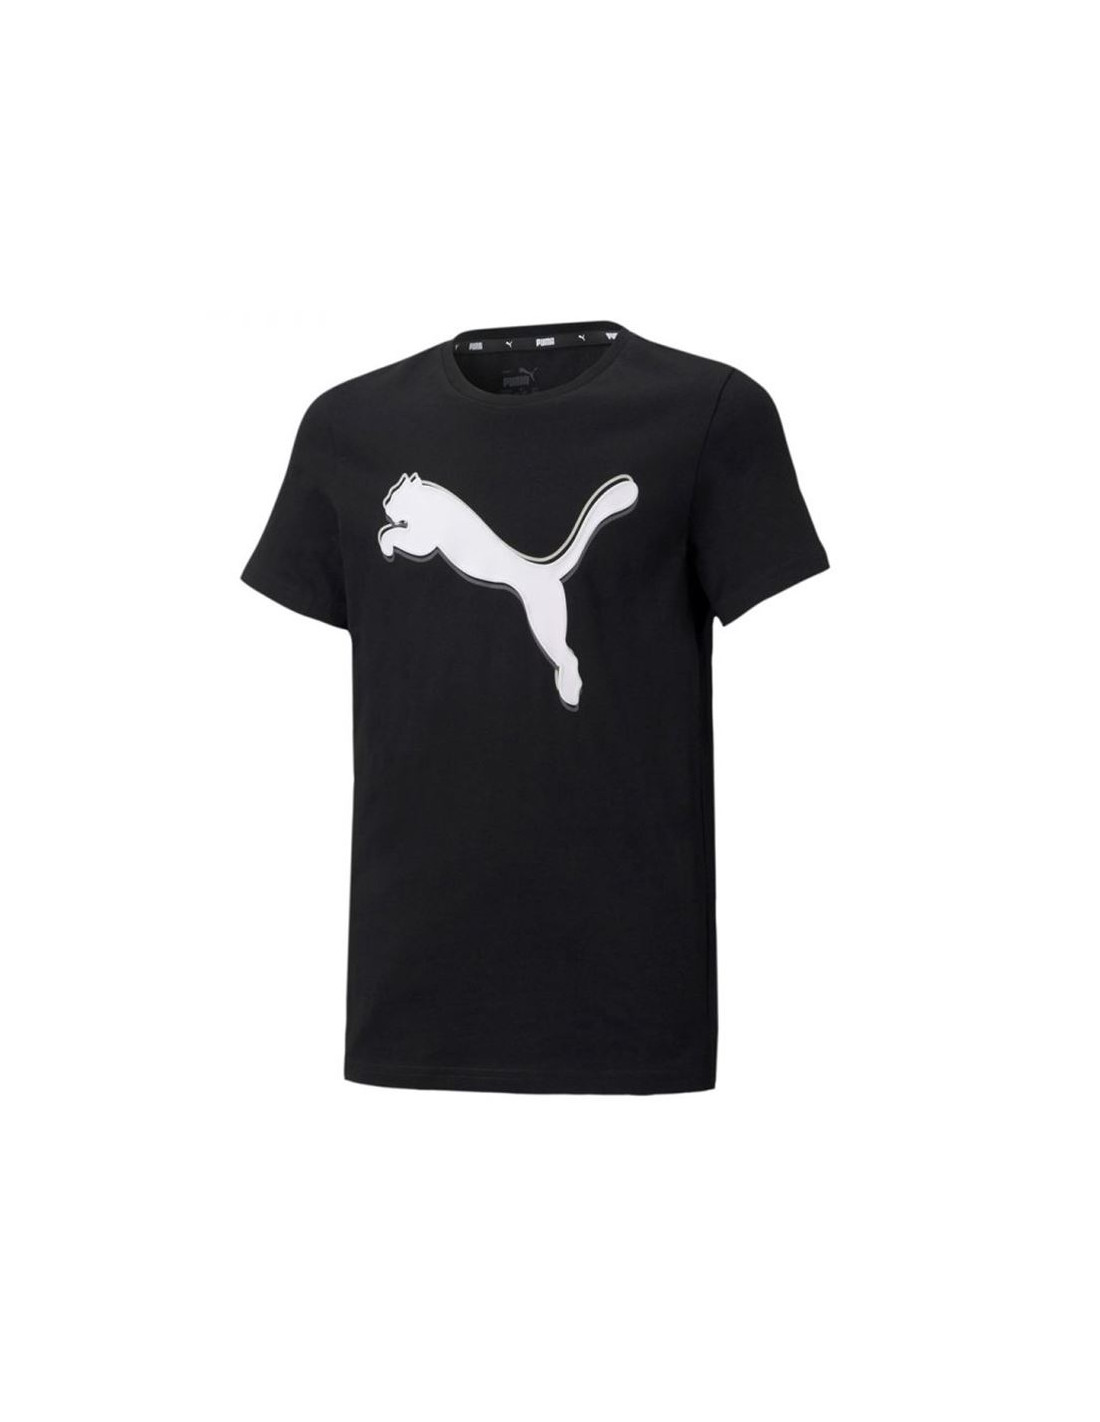 Camiseta sportswear puma graphic